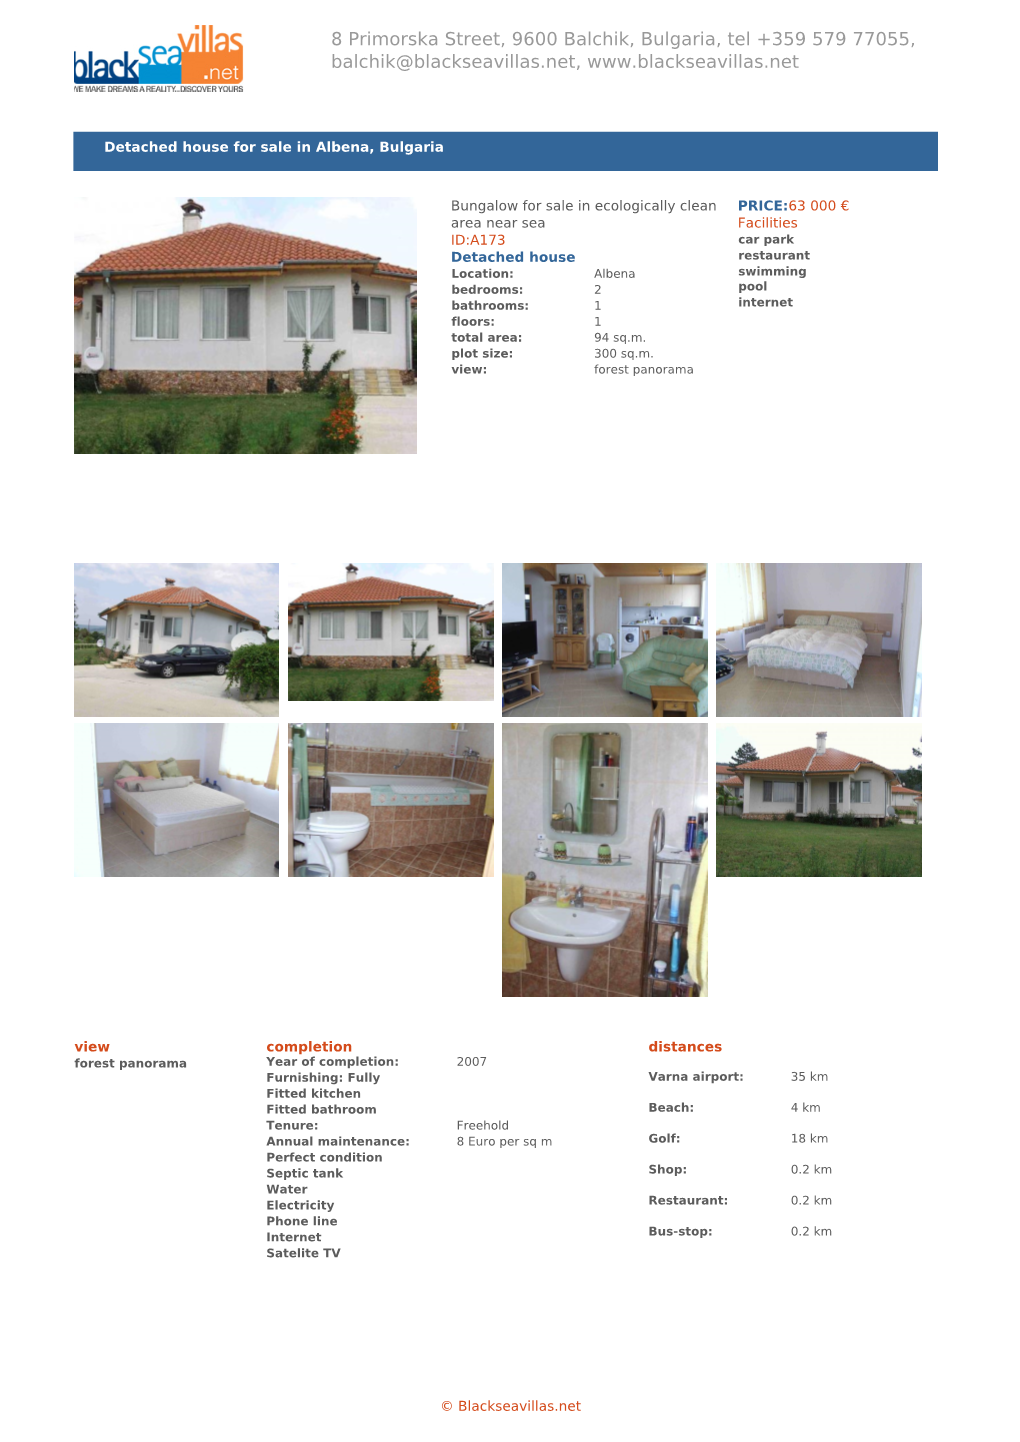 8 Primorska Street, 9600 Balchik, Bulgaria, Tel +359 579 77055, Balchik@Blackseavillas.Net